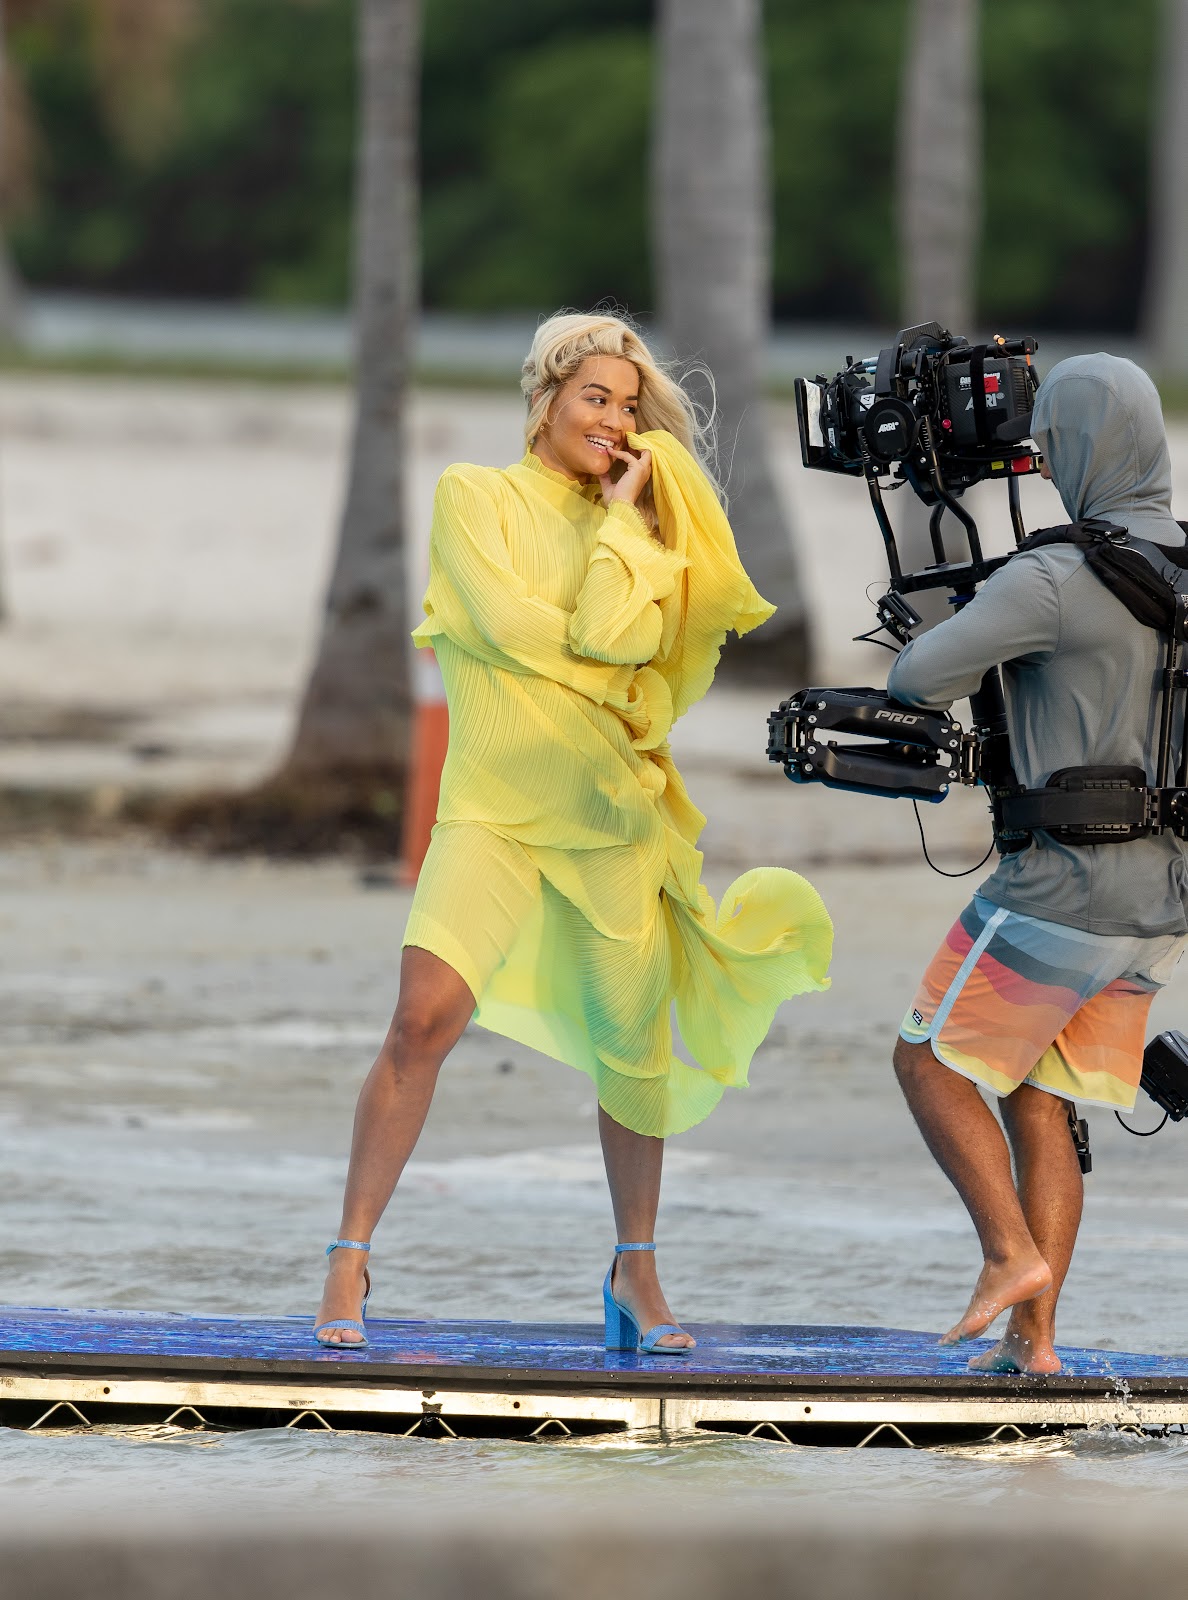 Rita Ora Ass And Cameltoe While Shooting A Music Video In Miami.